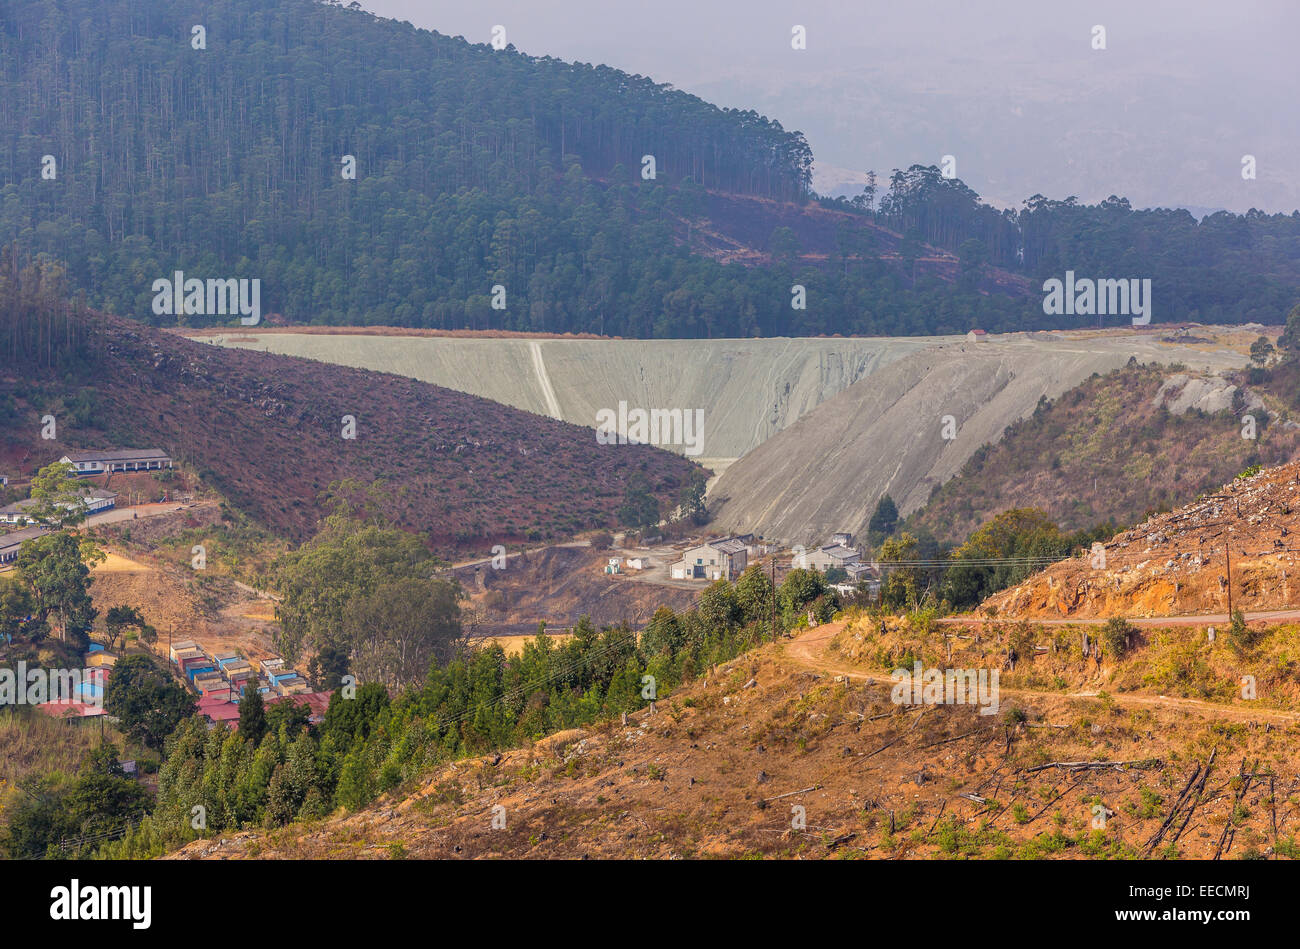 BULEMBU, Swasiland, Afrika - Tailings am ehemaligen Asbest Bergbaustadt, jetzt weitgehend unbewohnt. Stockfoto